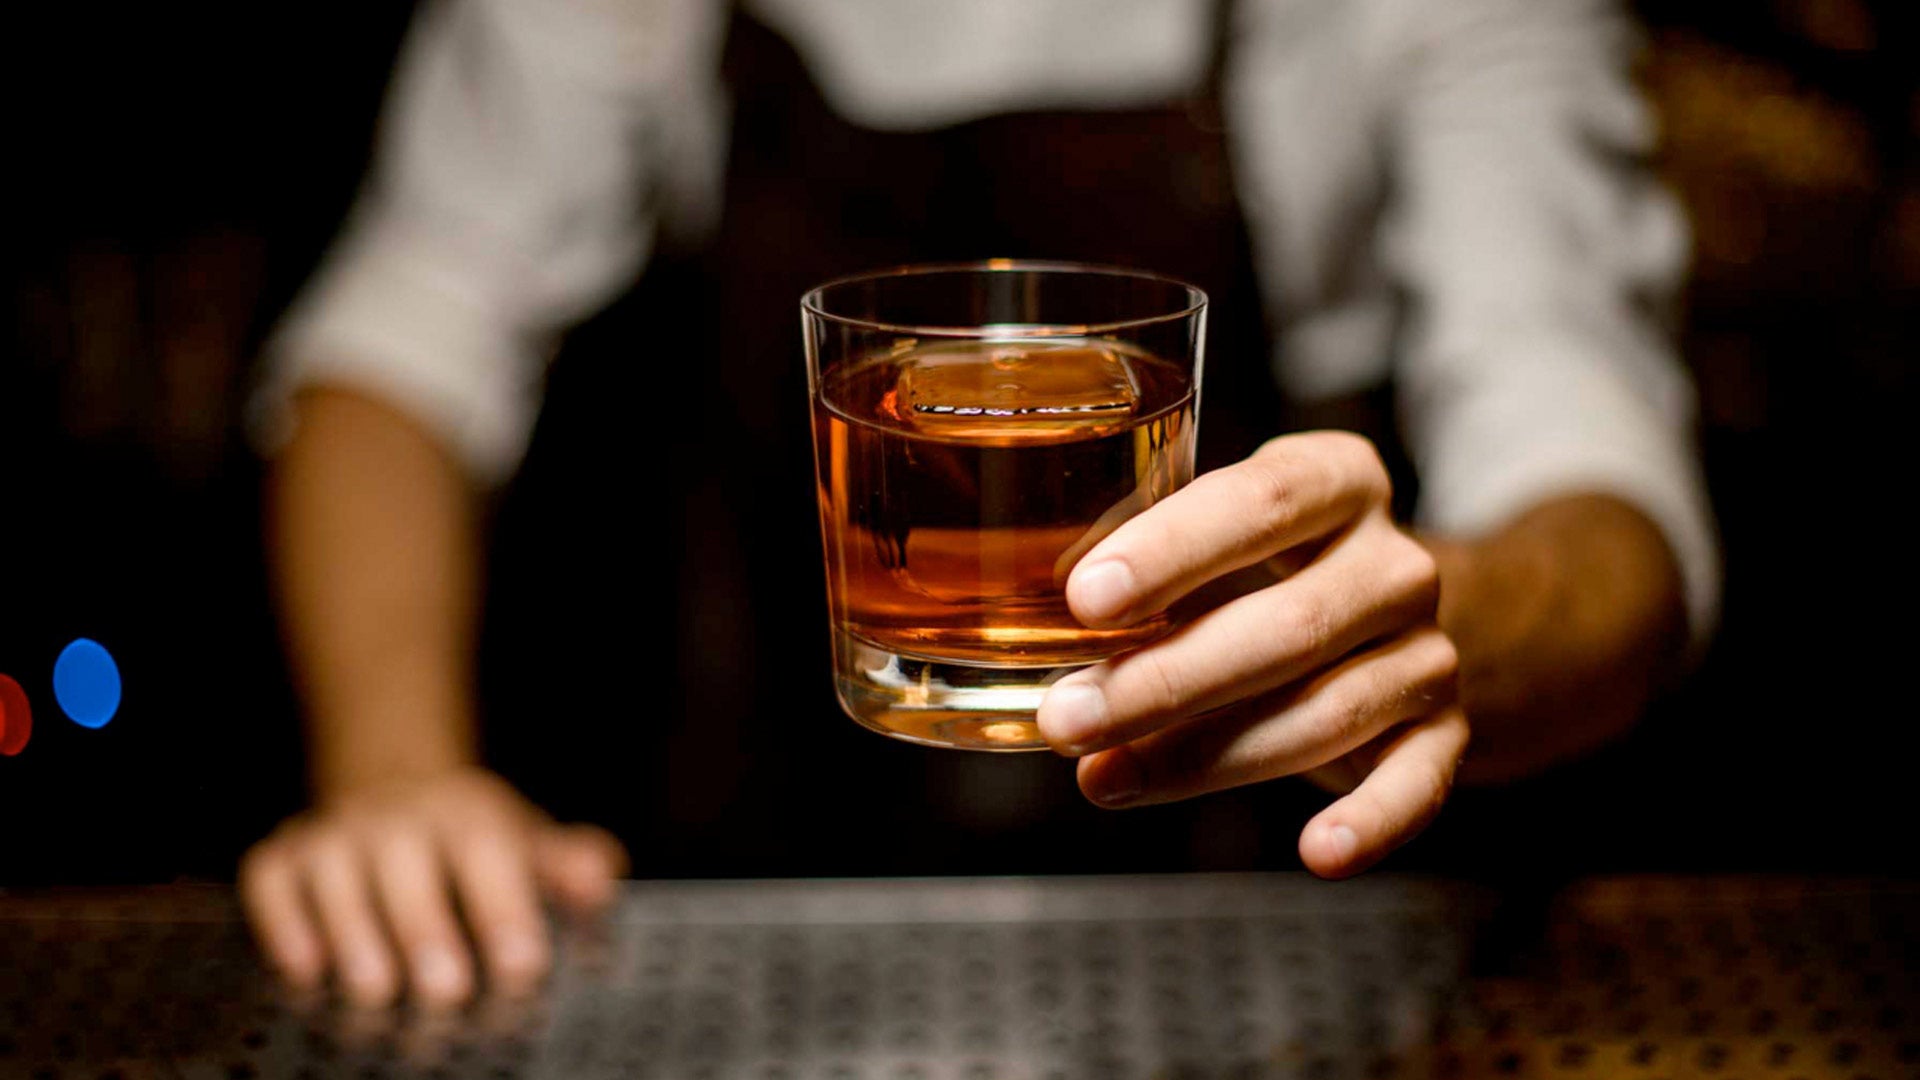 Serve it Up: Six Ways to Enjoy Whisky